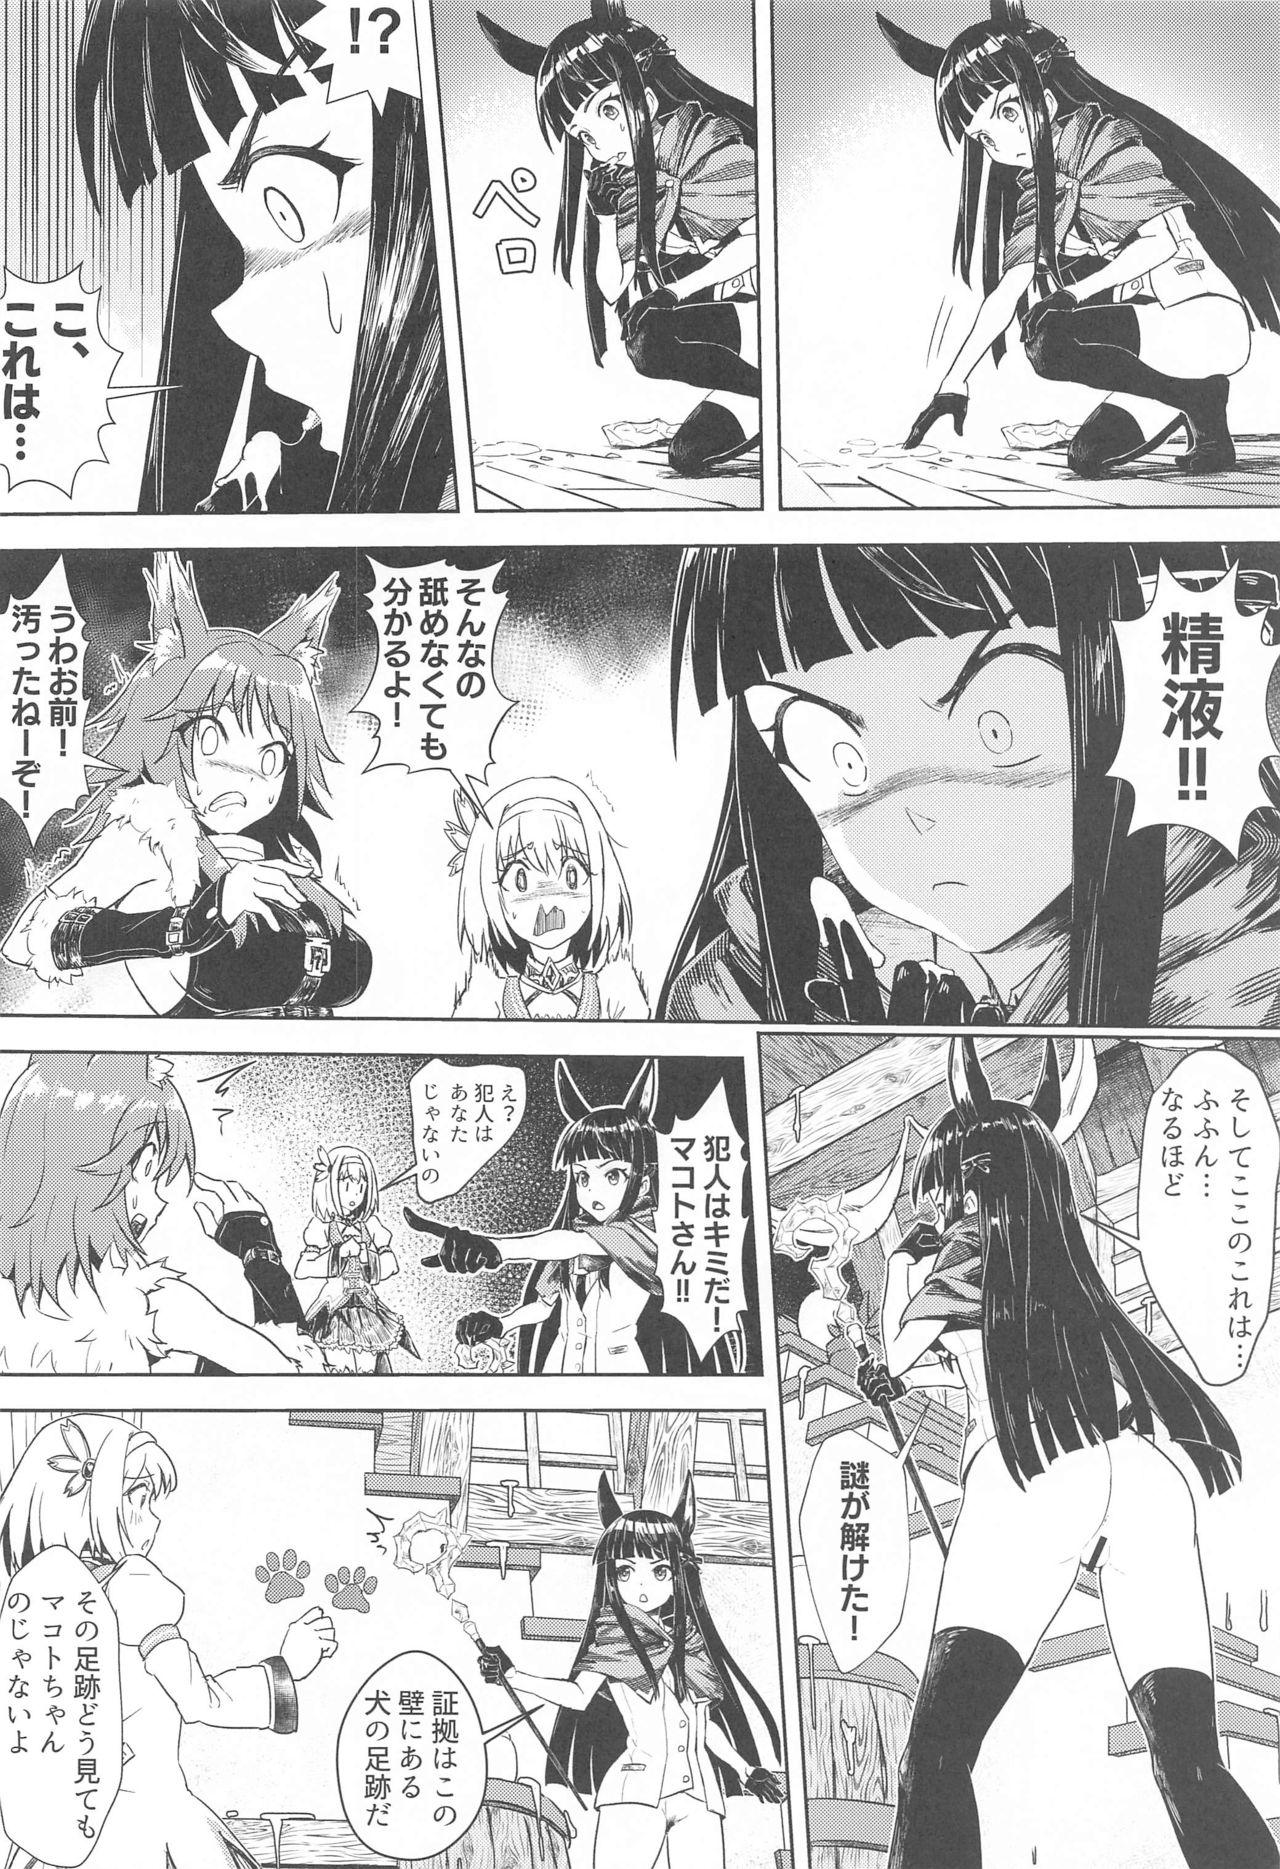 Trimmed Outo no Meitantei Inyuu no Sanjuushi - Princess connect Jerking - Page 5